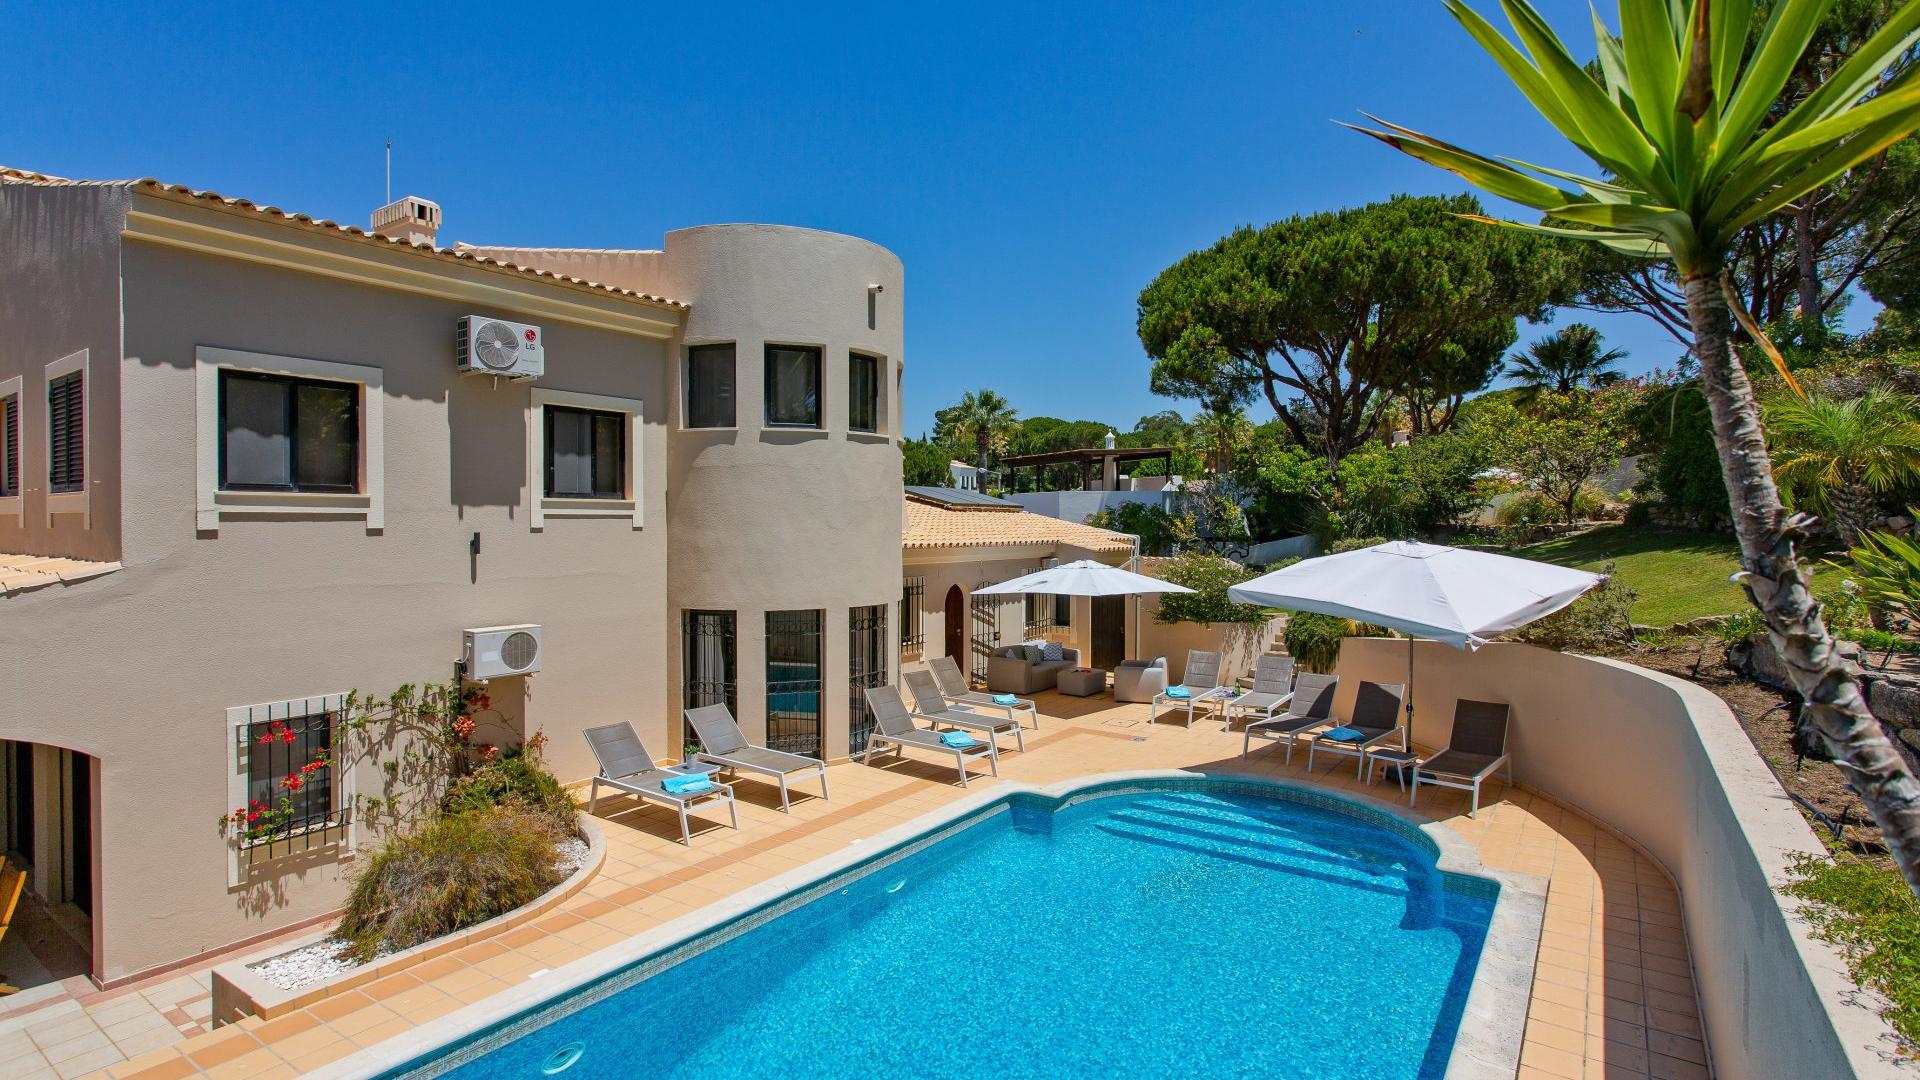 Villa Esplendido - Dunas Douradas, Vale do Lobo, Algarve - _O5A2014.jpg